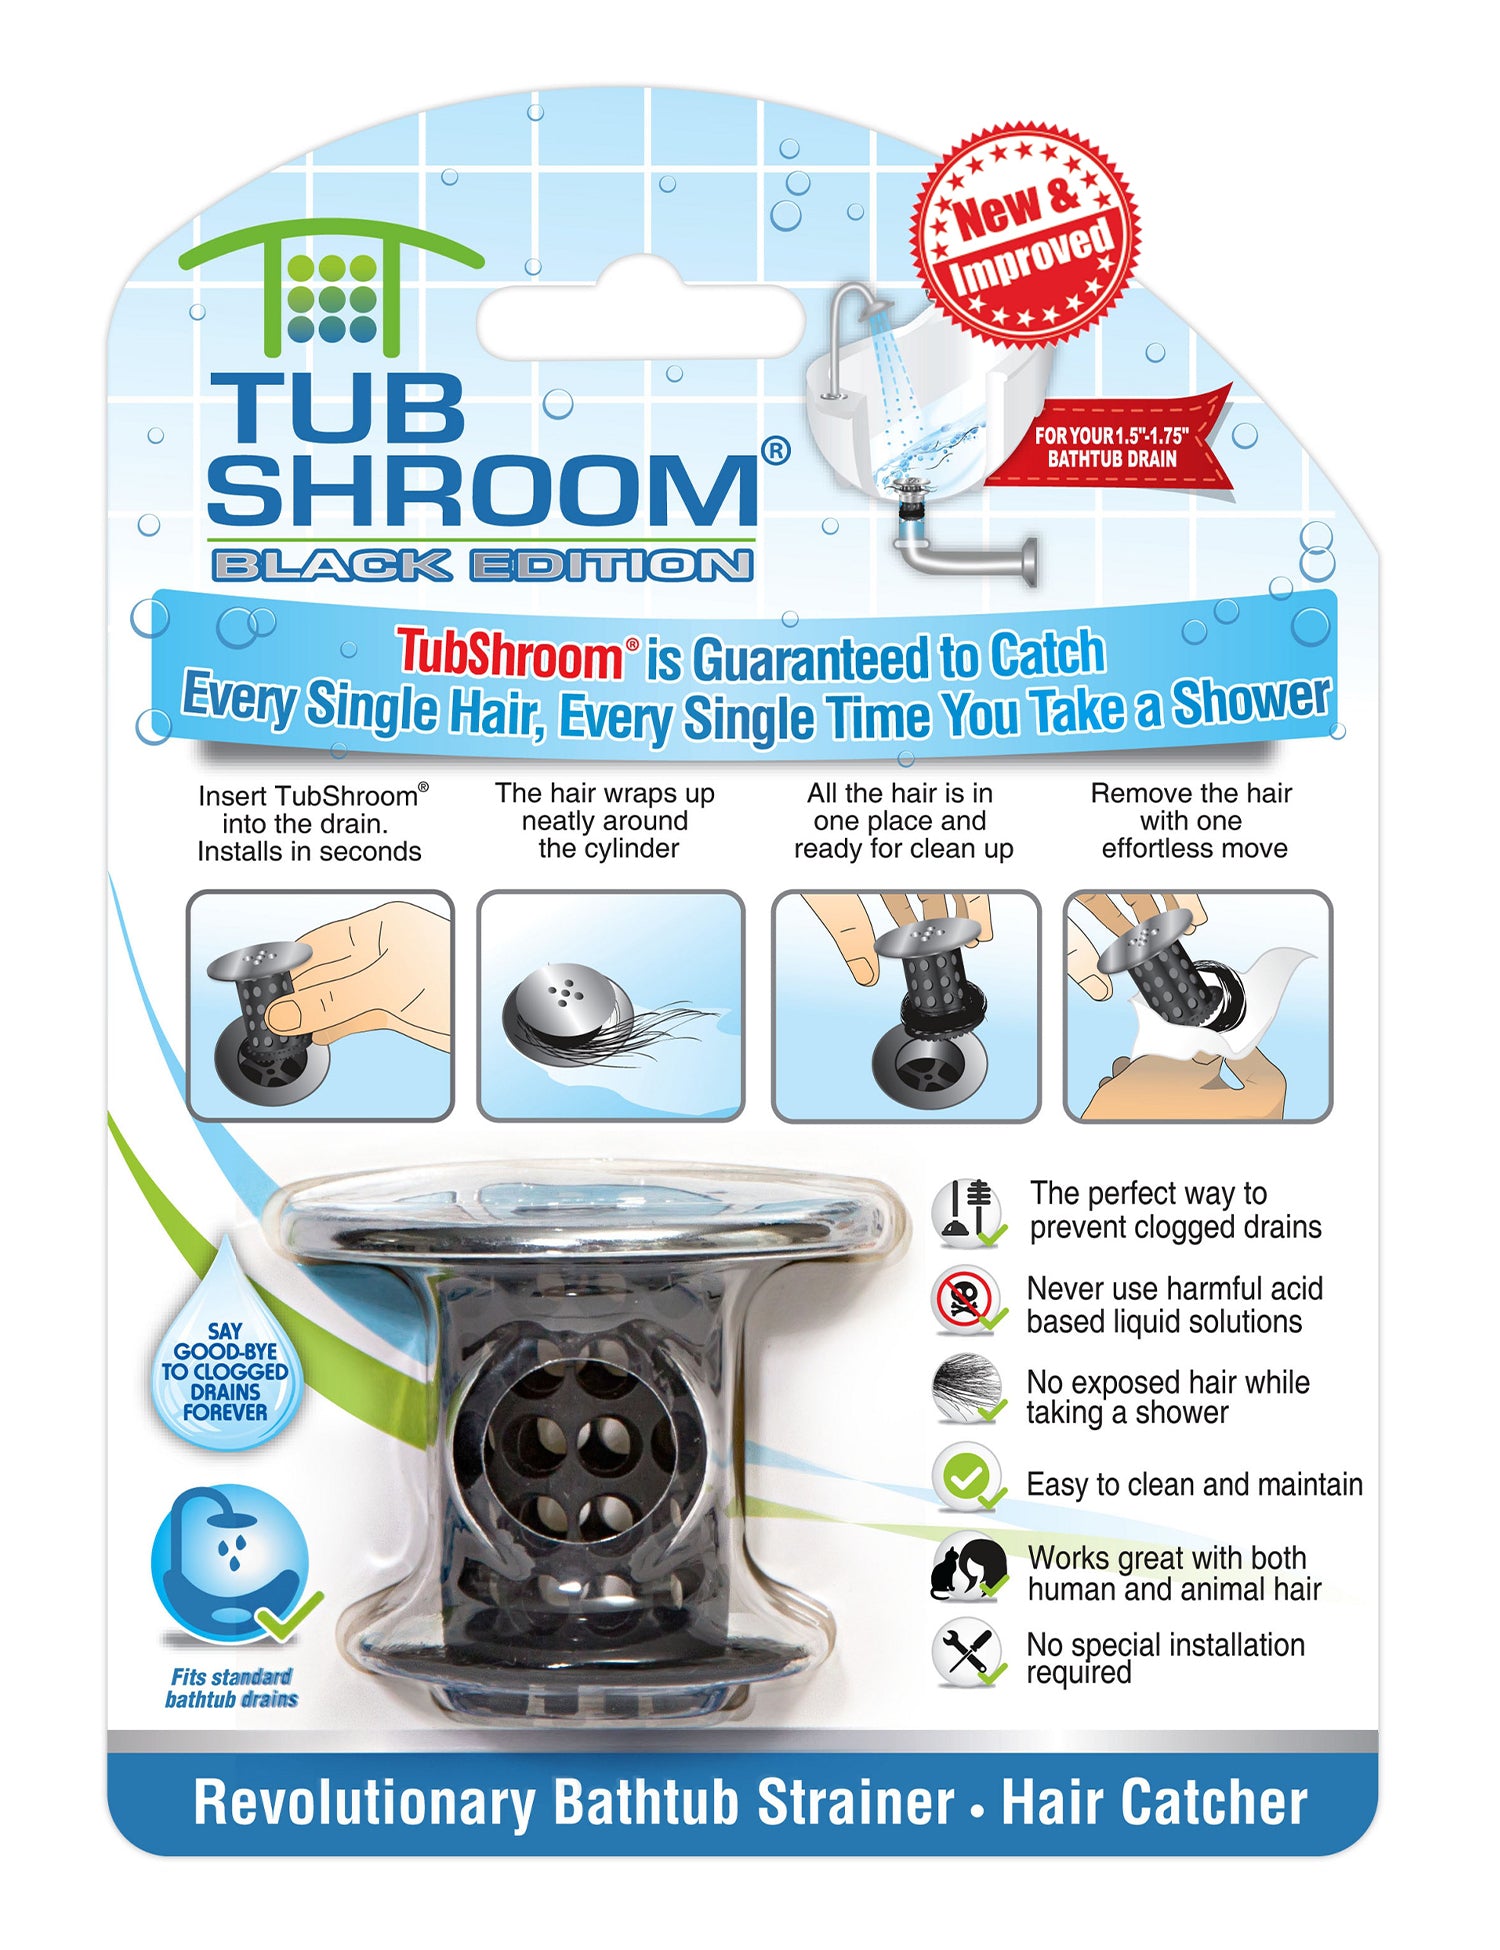 Tub Shroom Ultra Platinum Bundle Fits standard 1.5 to 1.75 bathtub drain  NEW